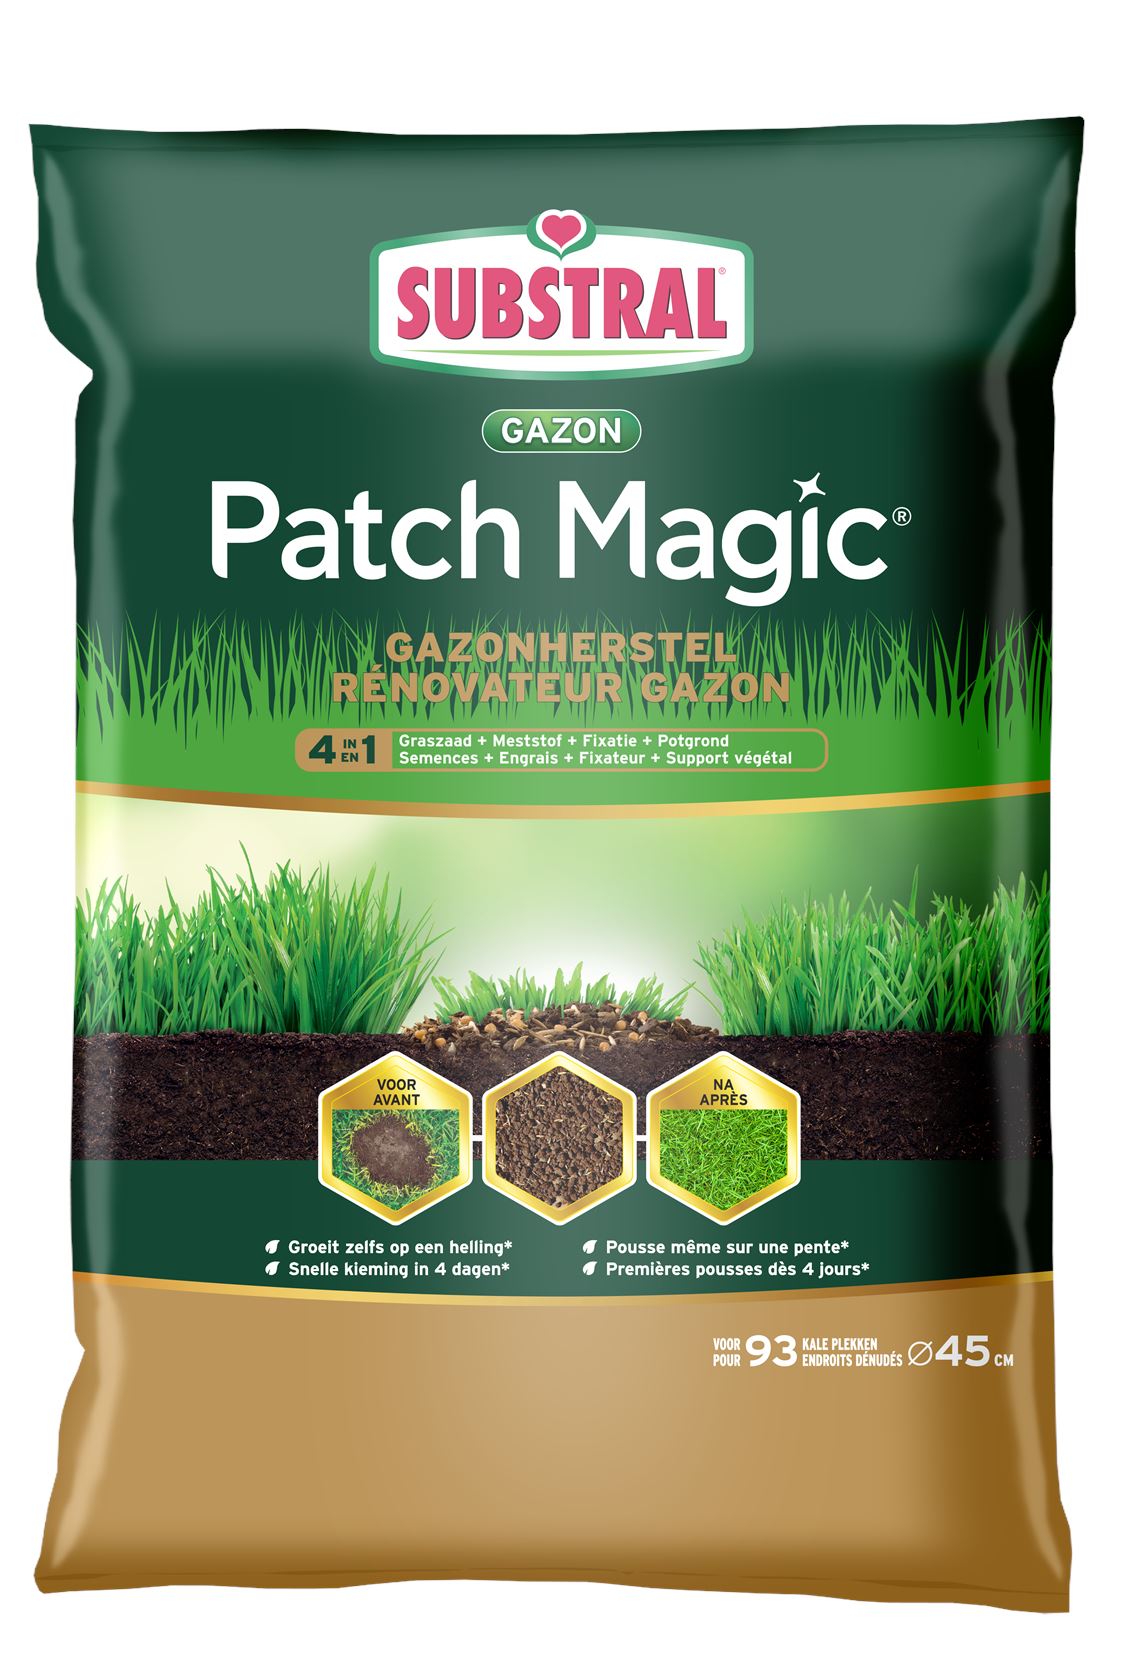 Substral-Patch-Magic-Gazonherstel-4-In-1-7kg